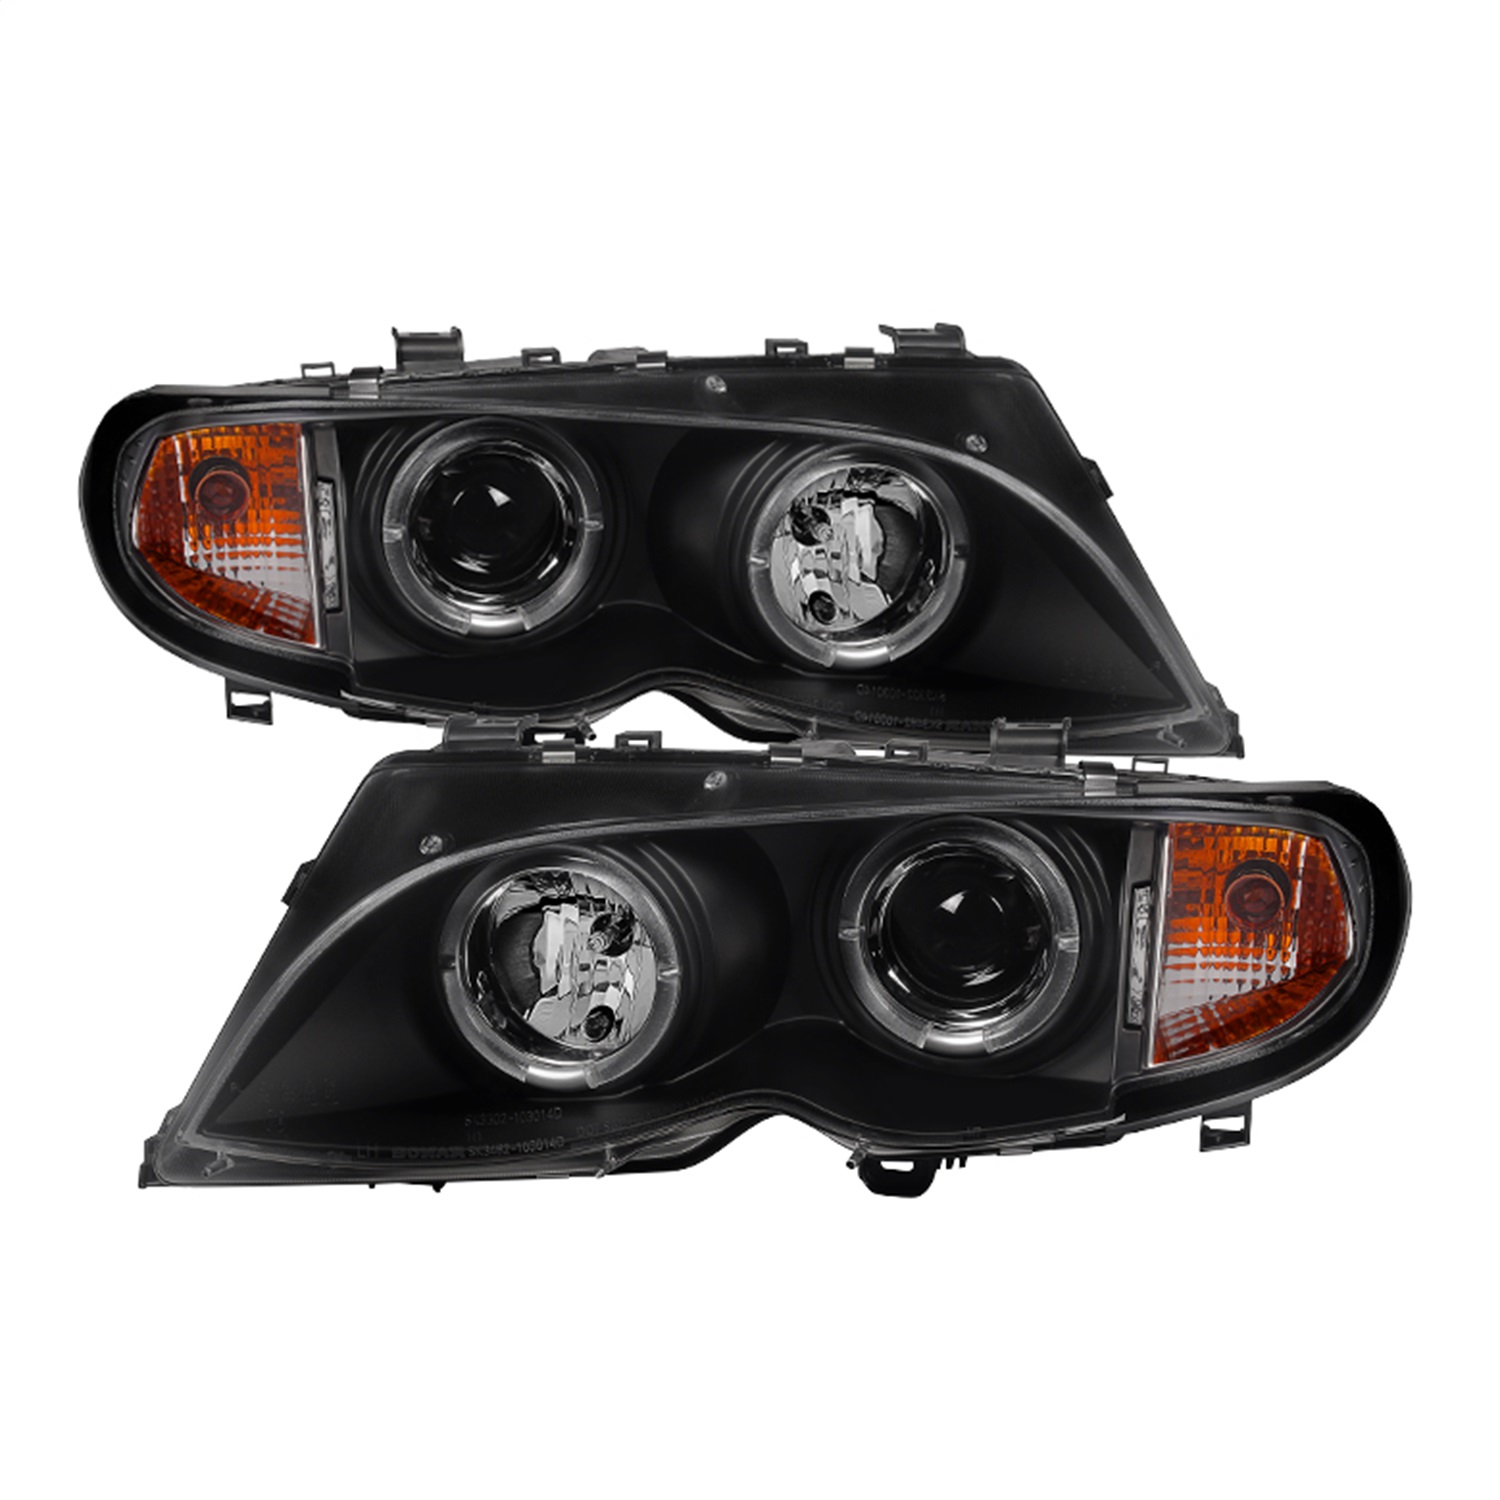 Spyder Auto 5042415 Halo Projector Headlights Fits 320i 325i 325xi 330i 330xi